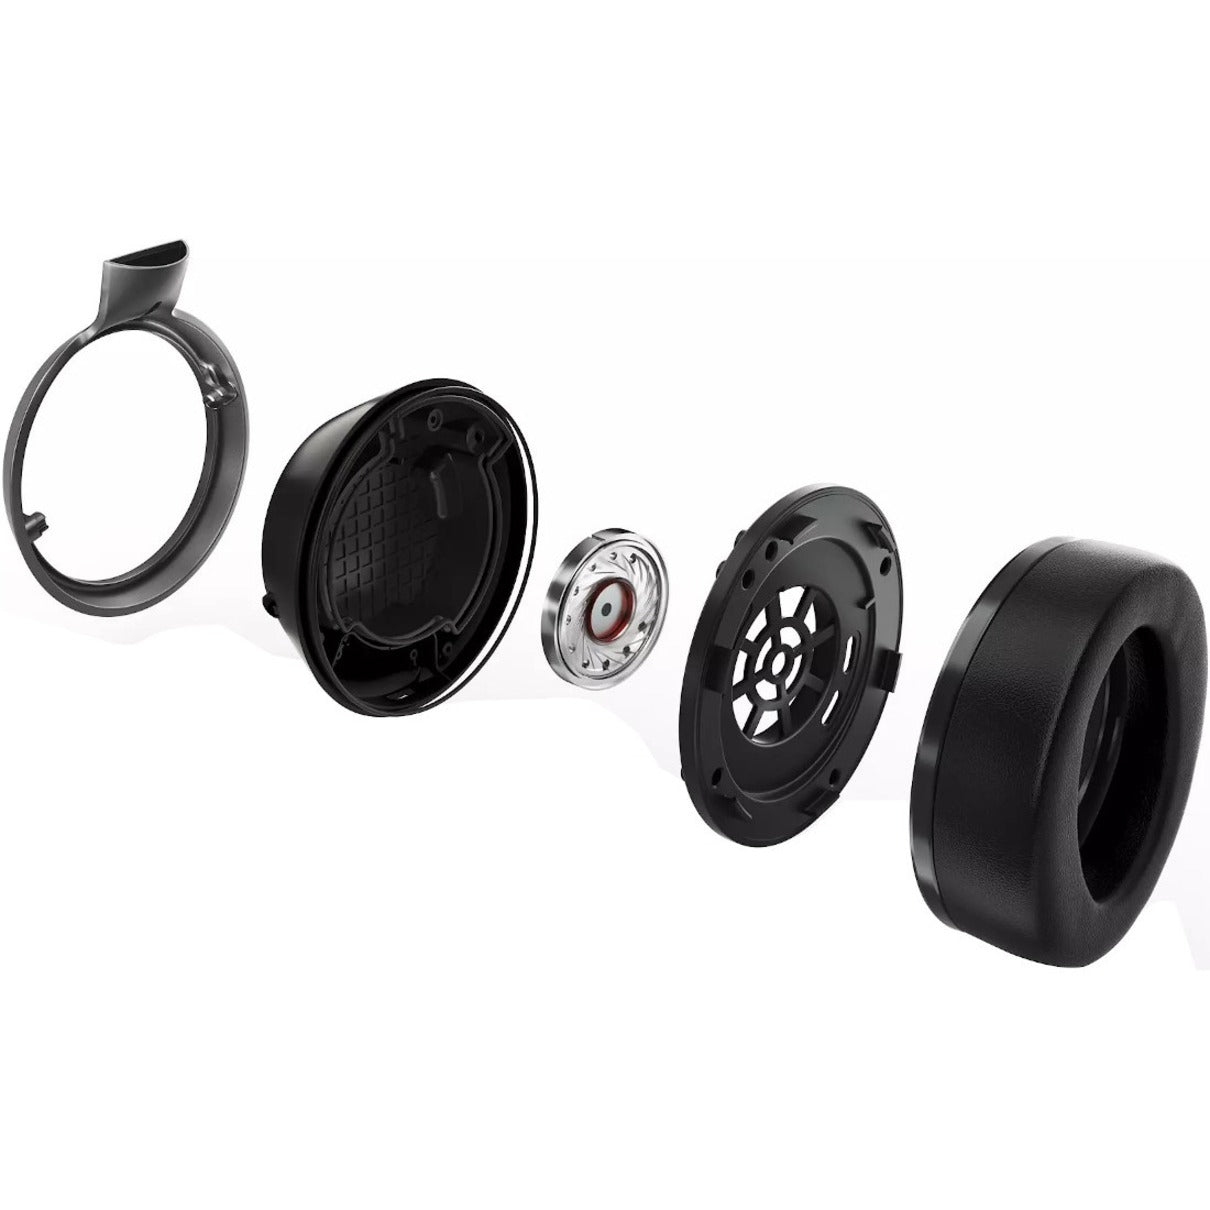 Fidelio L3/00 Over-Ear Wireless Headphones, Lightweight, Noise Canceling, Bluetooth